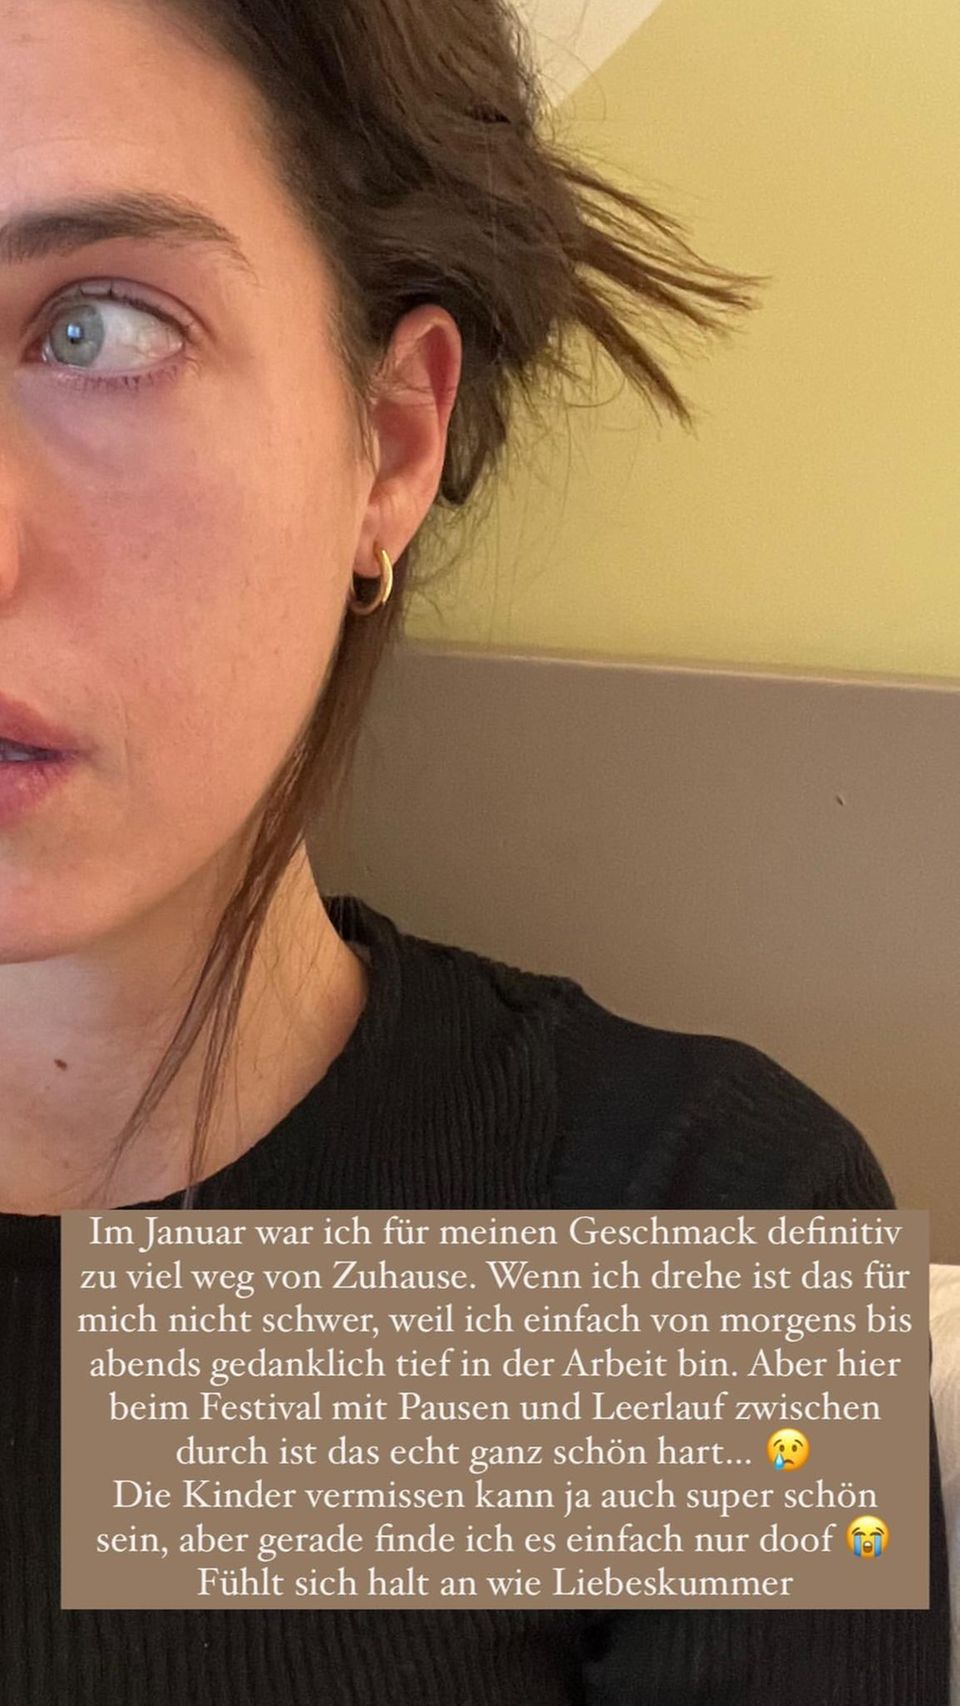 Marie Nasemann: She cries because of her children